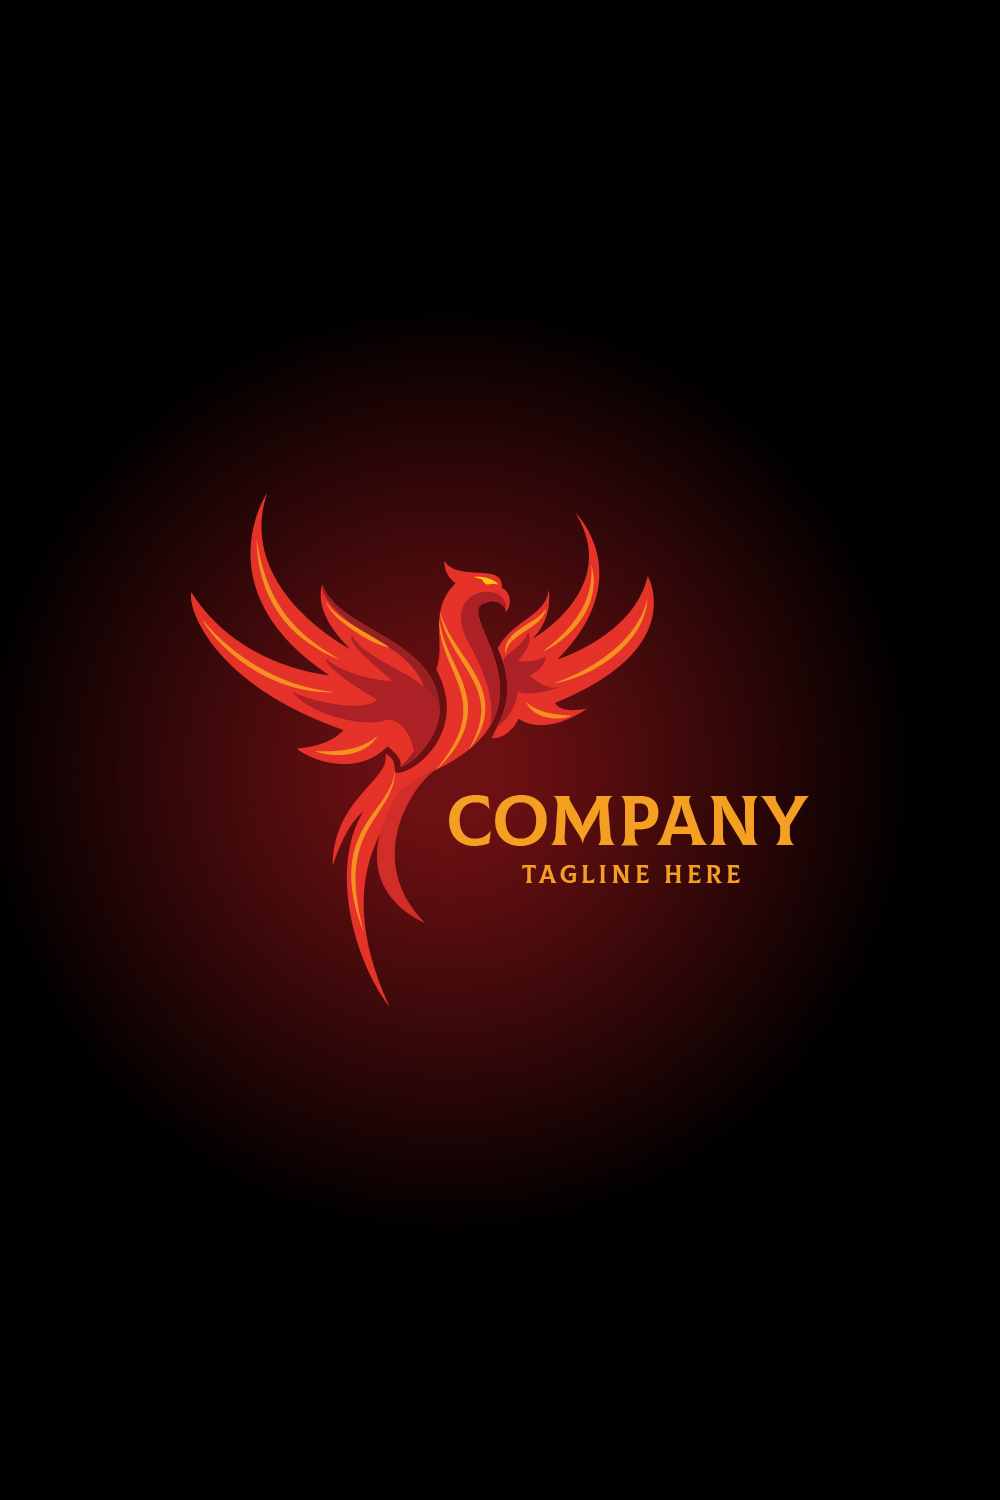 Phoenix Logos pinterest preview image.